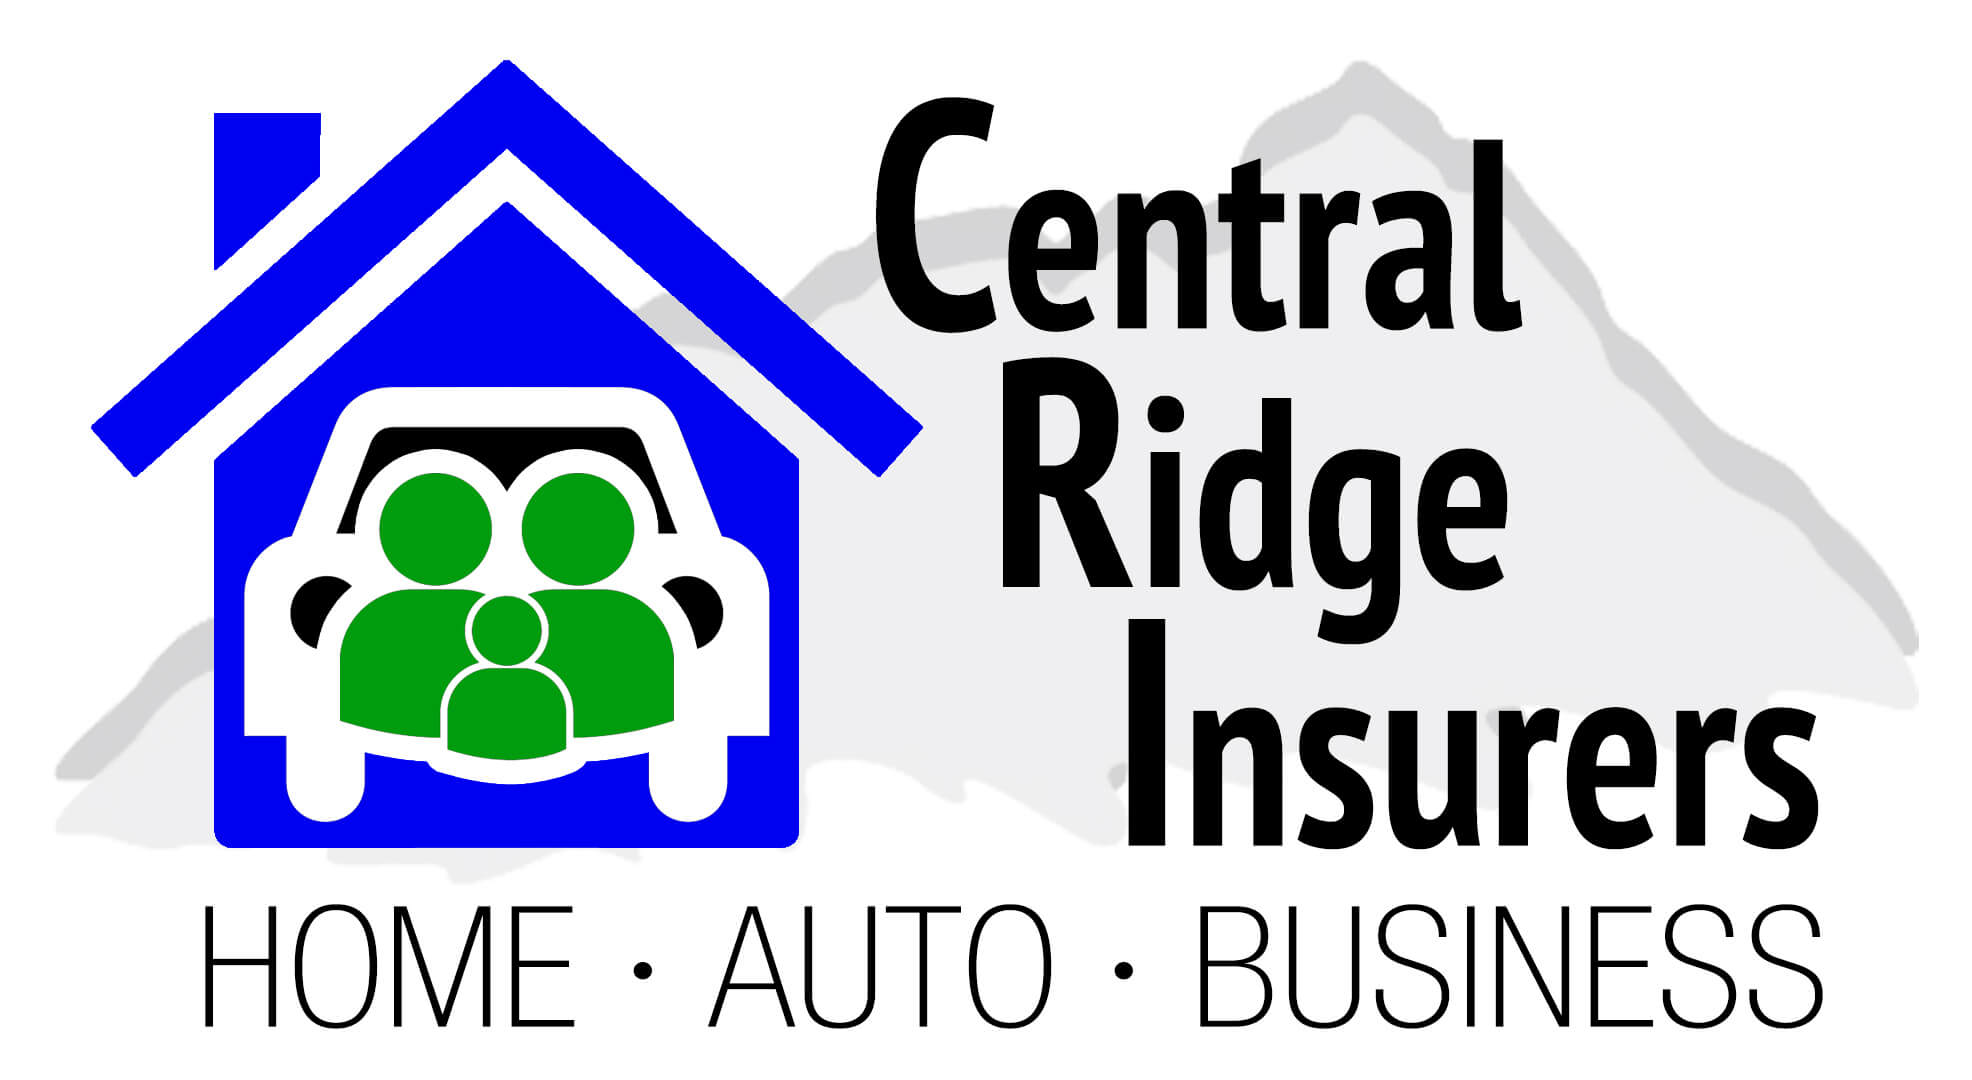 Central Ridge Insurance